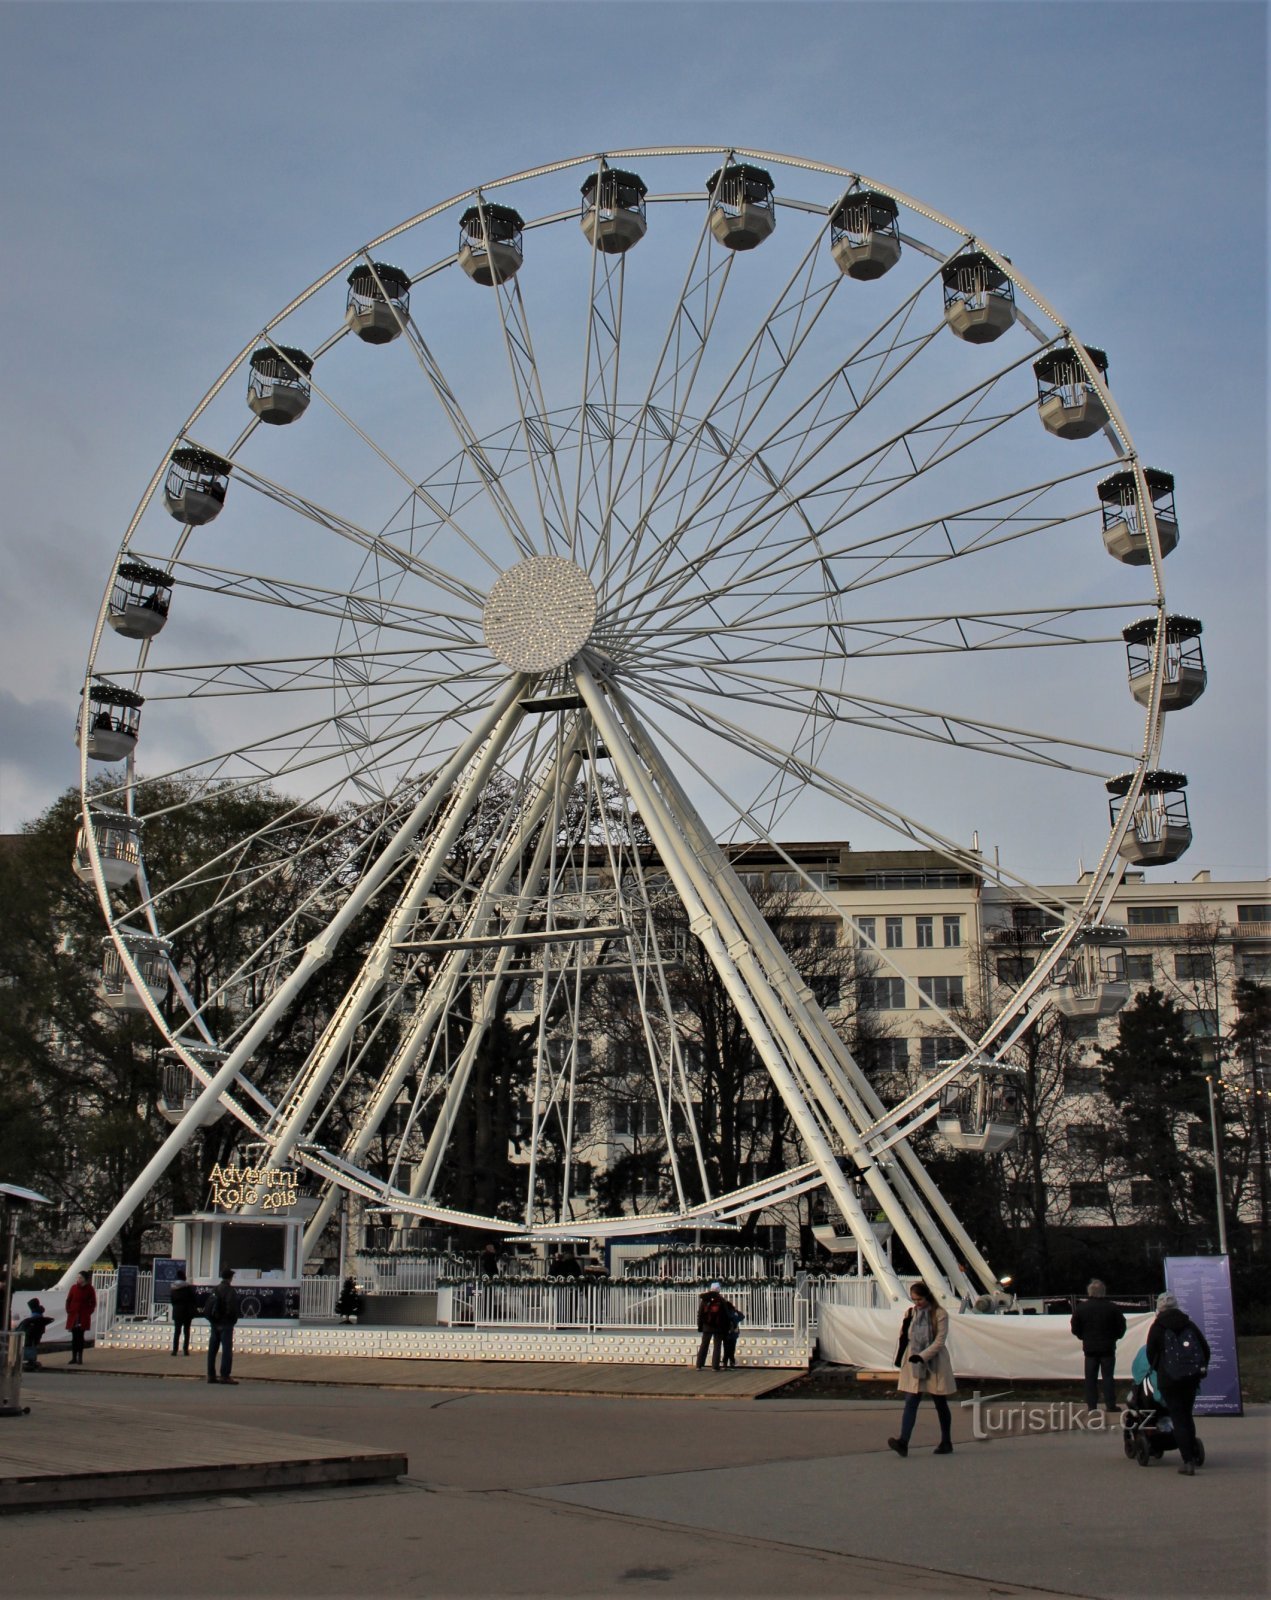 Brno - giant advent wheel